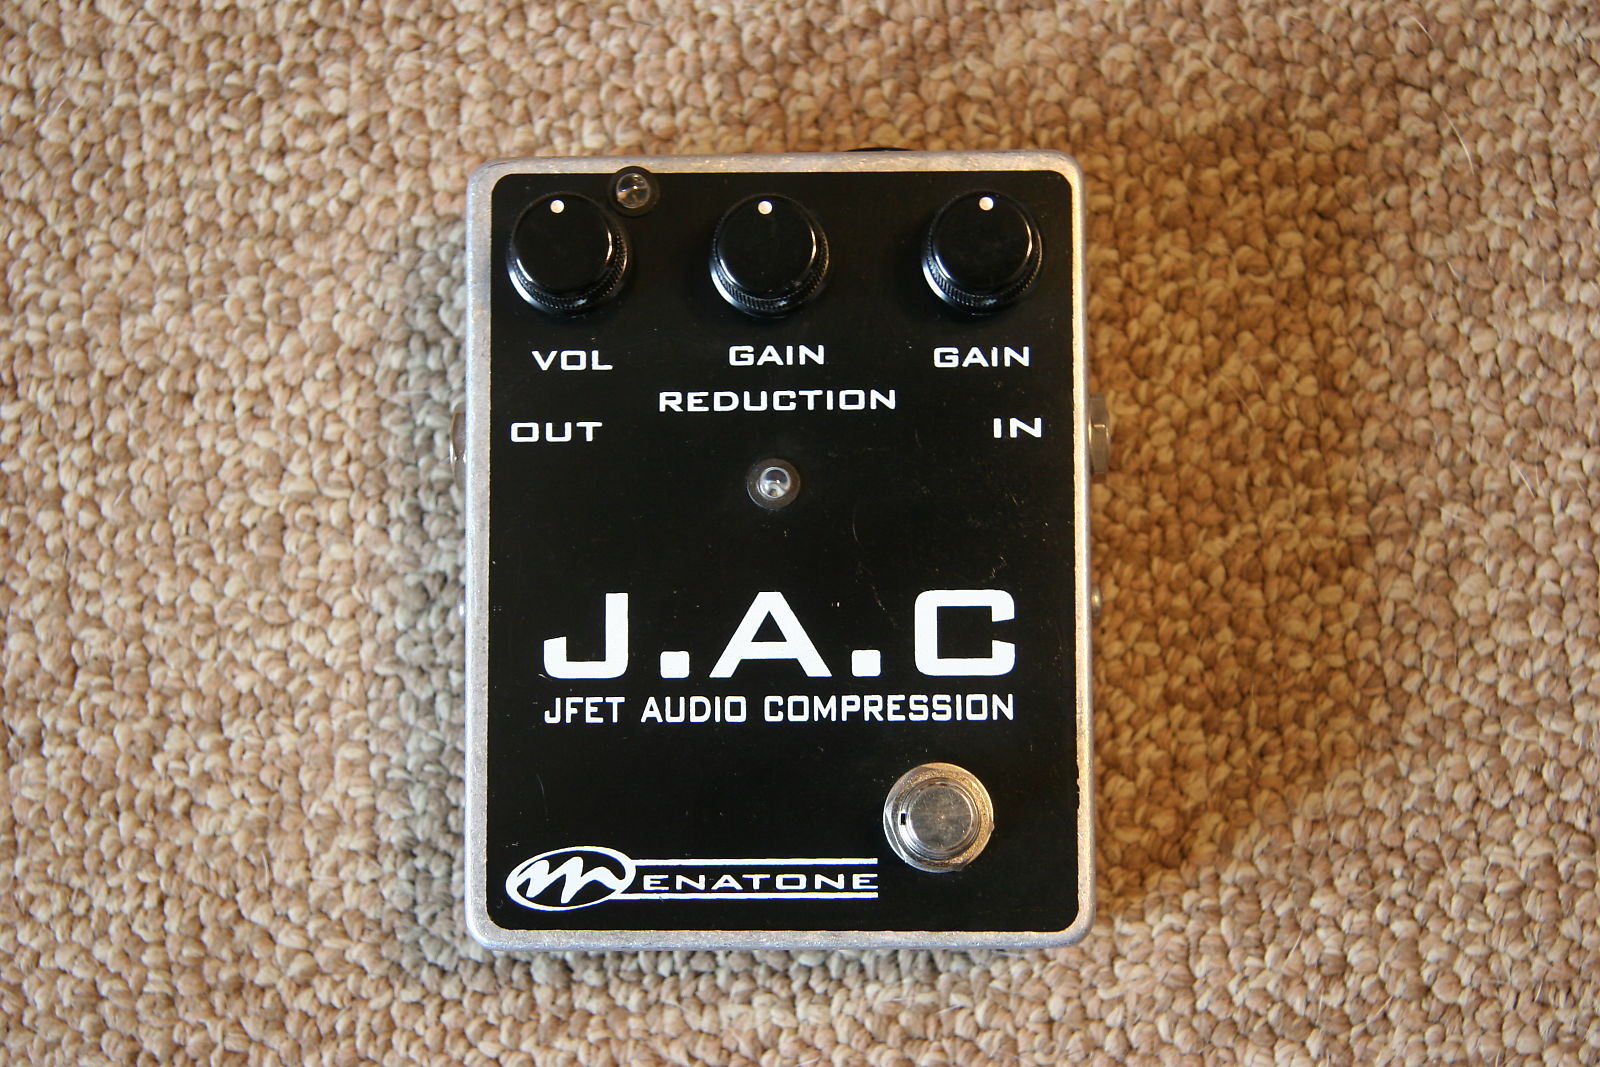 Menatone JAC JFET Audio Compressor | Reverb